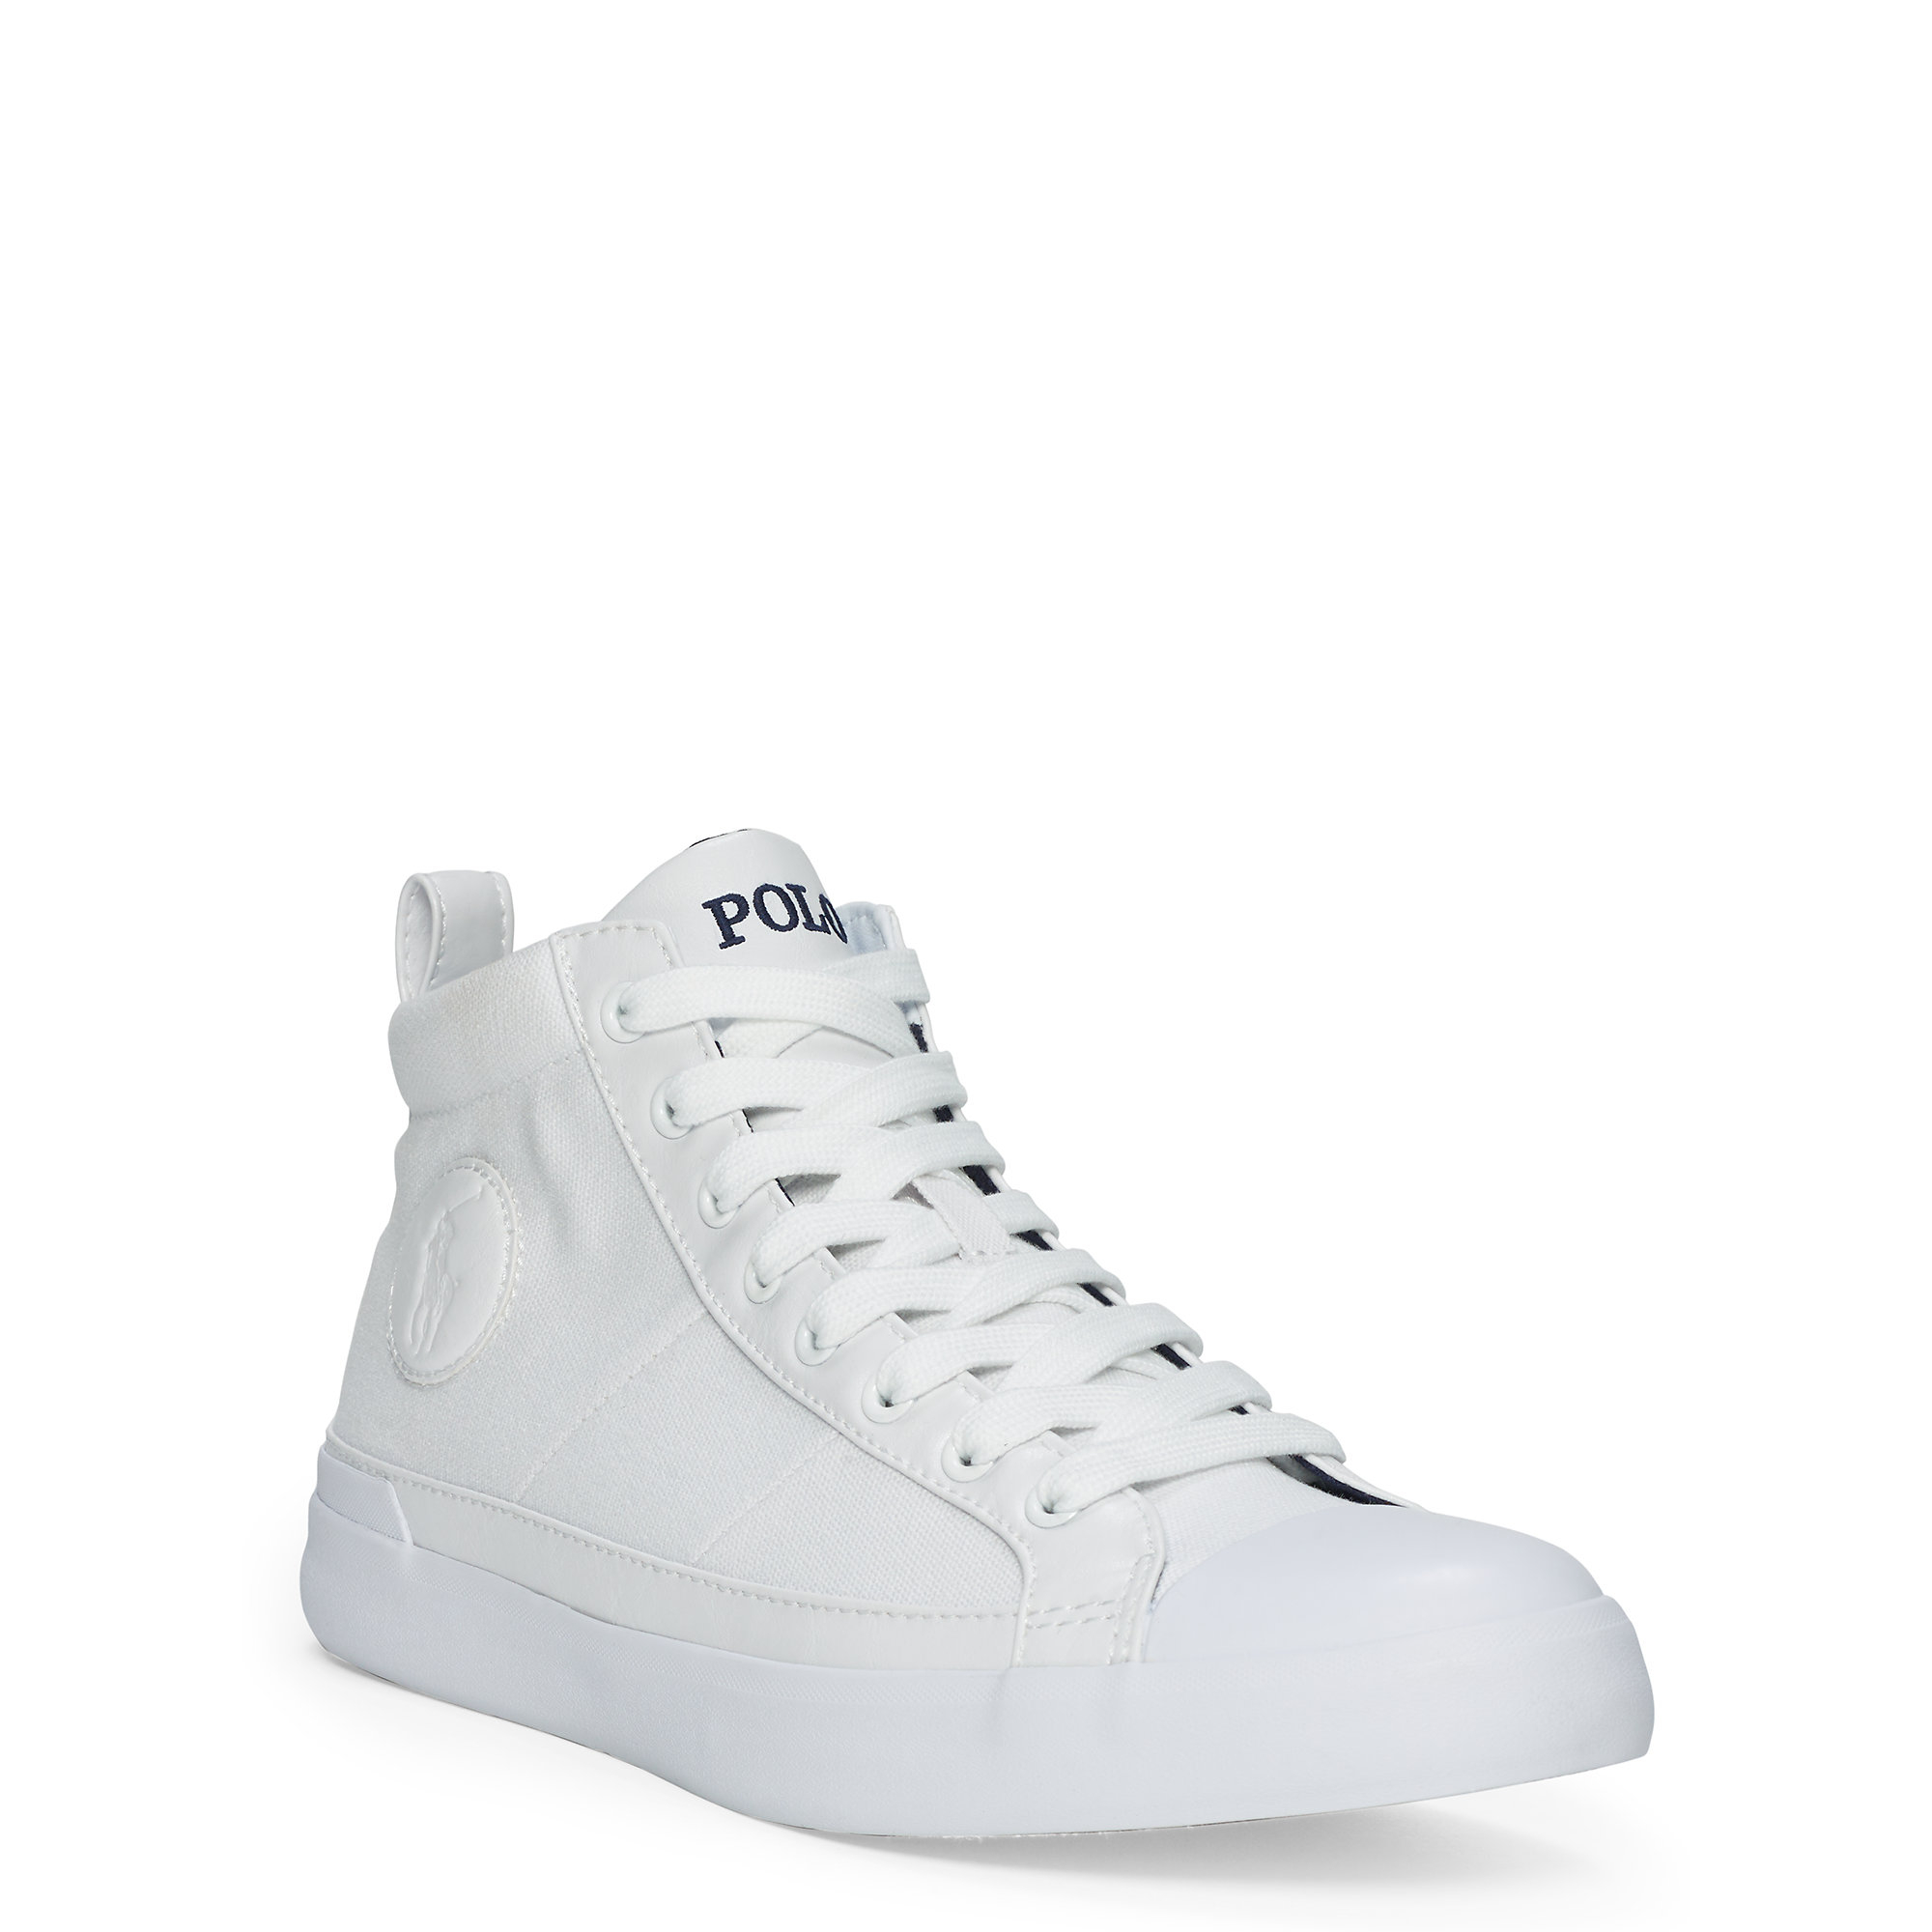 Polo Ralph Lauren Canvas Clarke High-top Sneaker in White for Men - Lyst